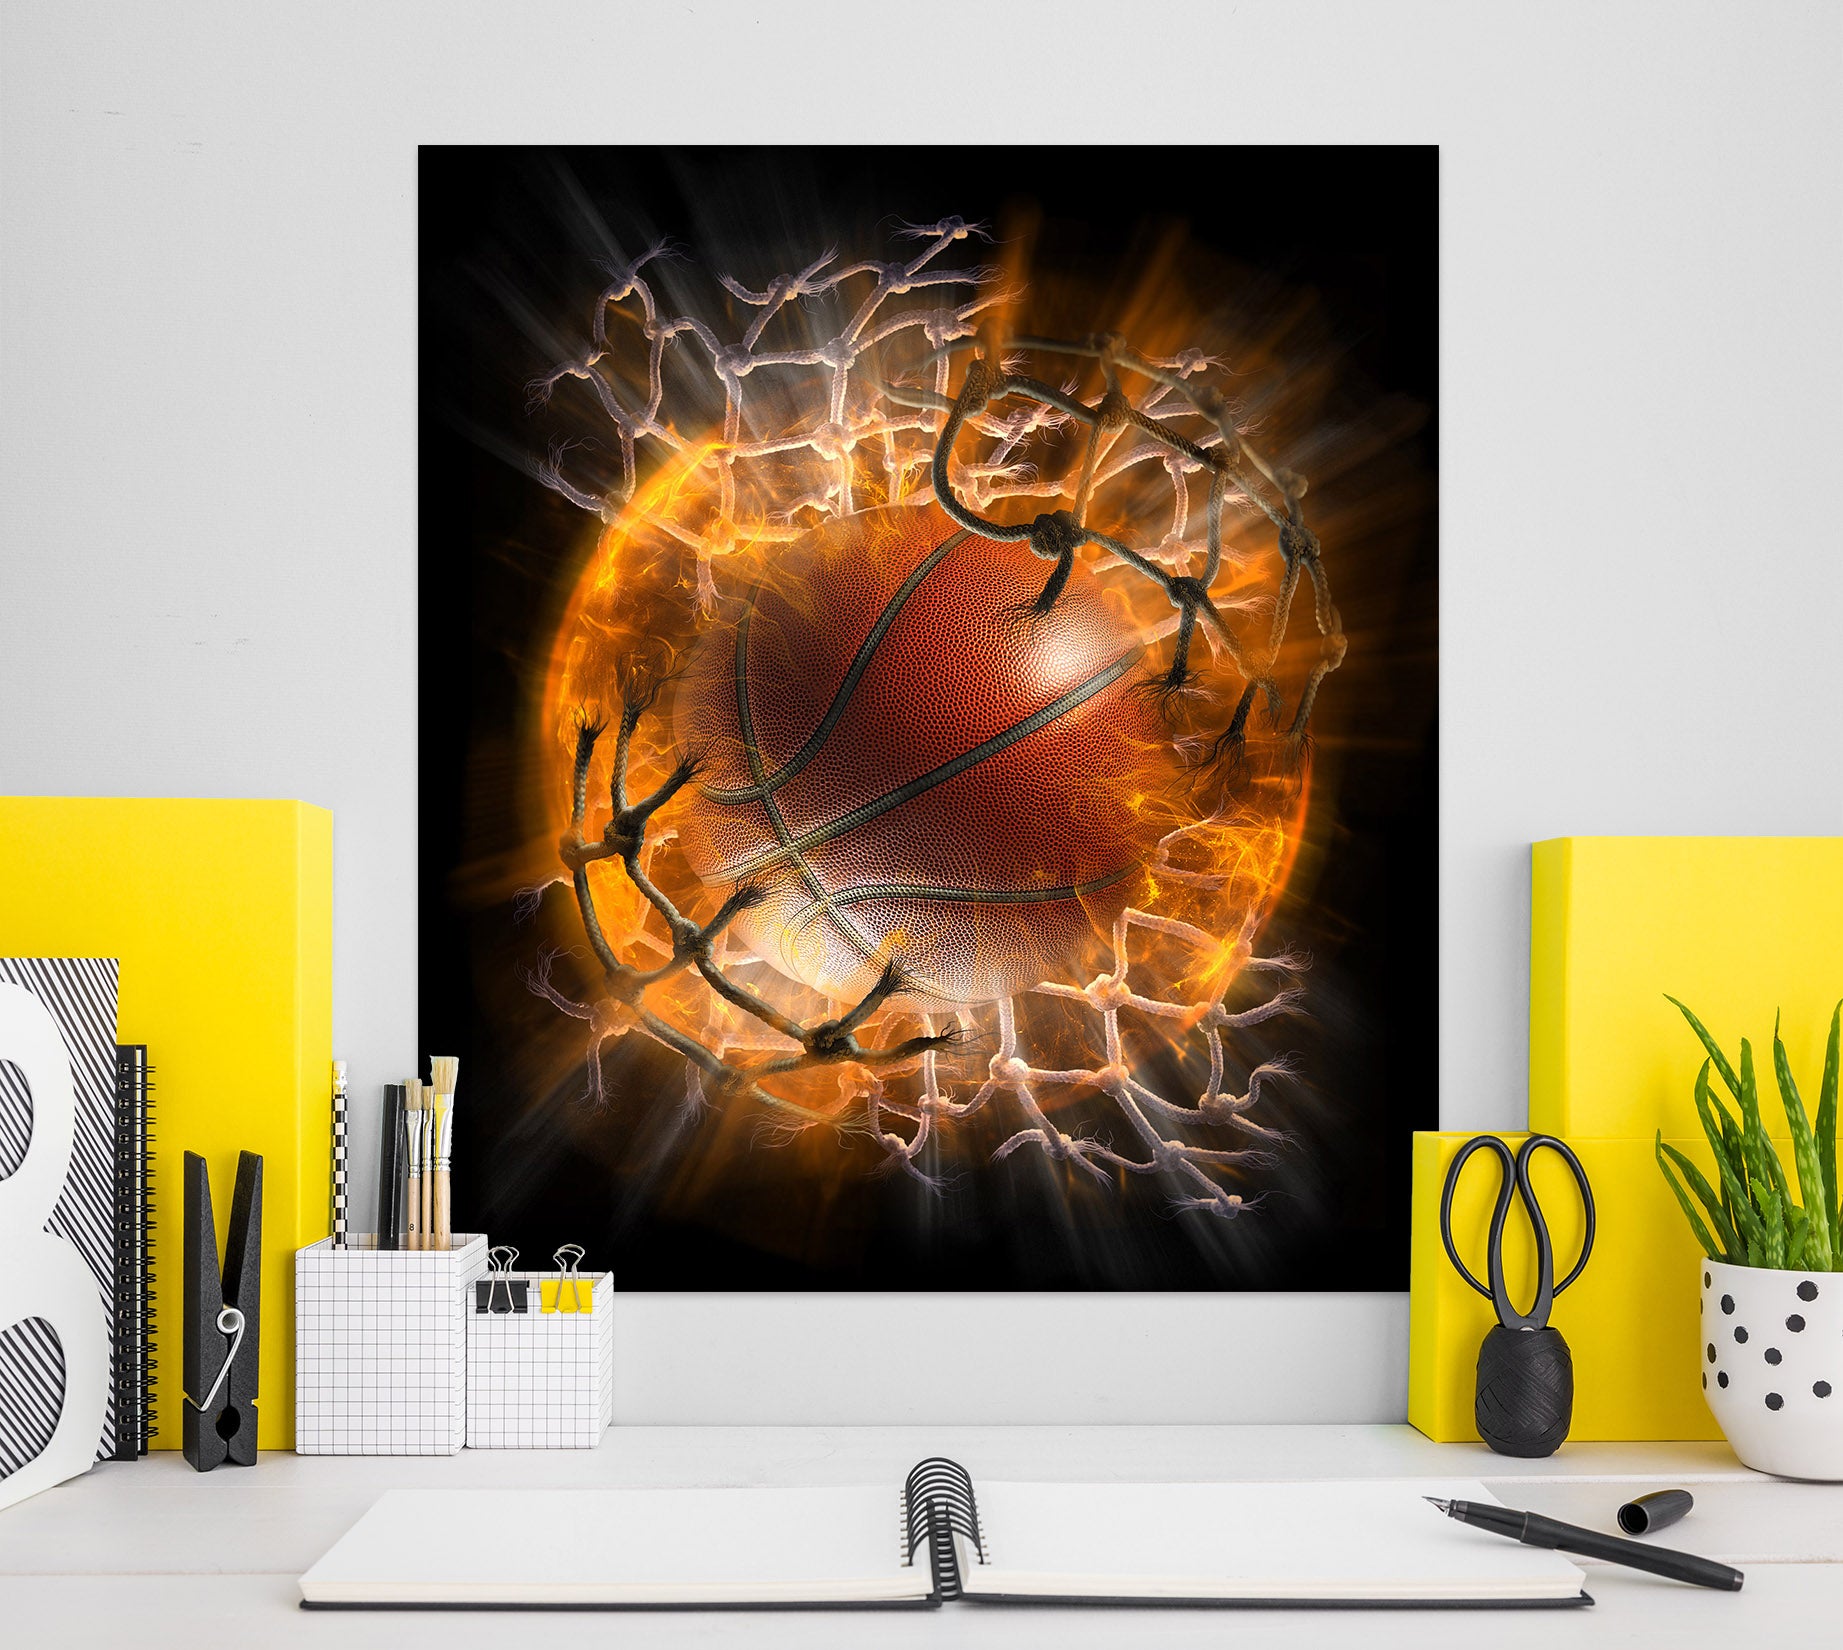 3D Magic Basketball 63563 Tom Wood Wall Sticker